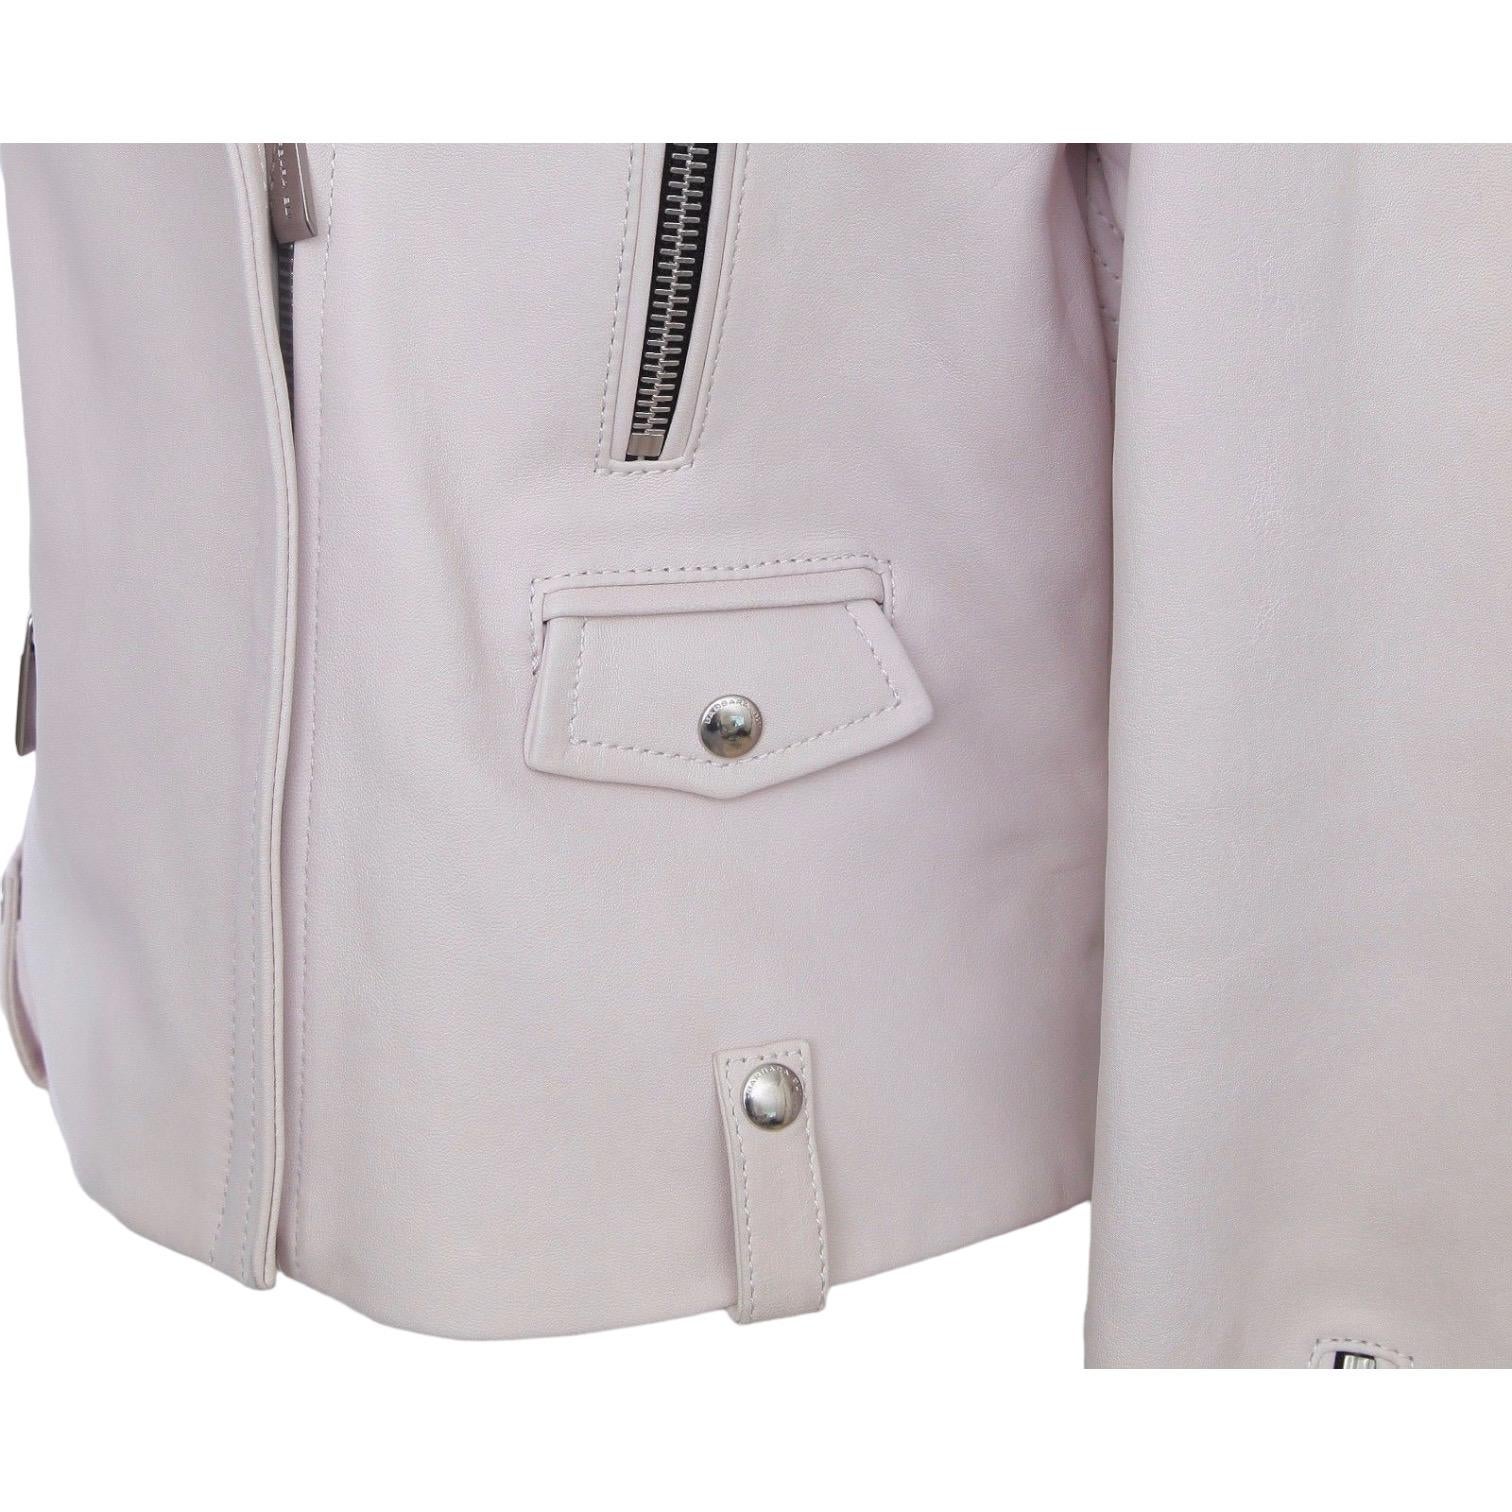 BARBARA BUI Jacket Leather Moto Coat Powder Pink Long Sleeve Zipper Sz 42 $2350 3